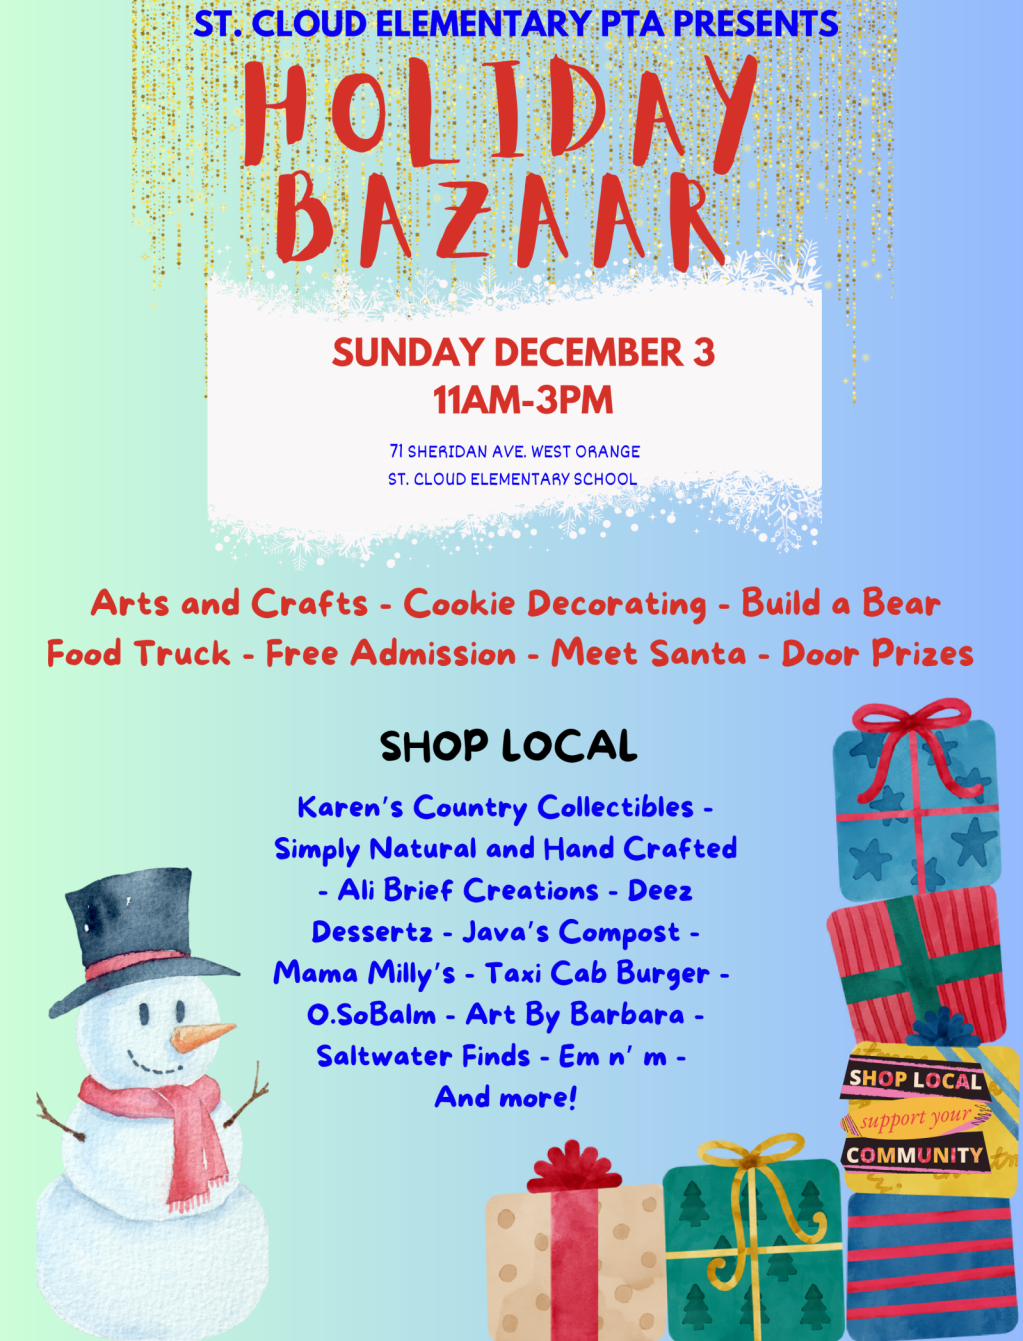 St. Cloud Holiday Bazaar – Sunday December 3rd